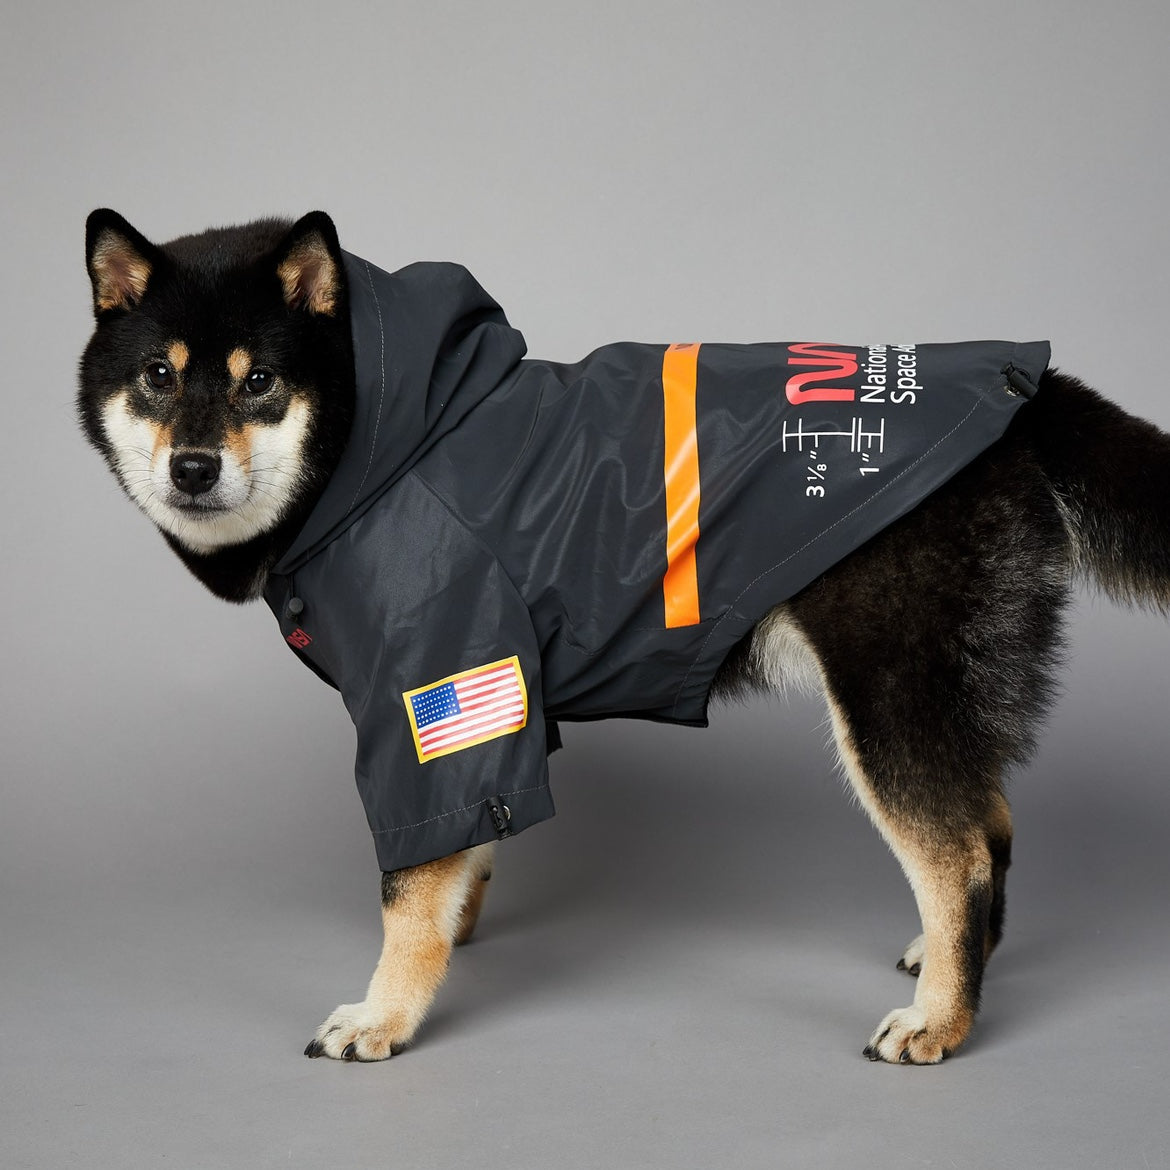 JCX NASA Dog Raincoats Pet Stylish Streetwear Outfit for Dogs